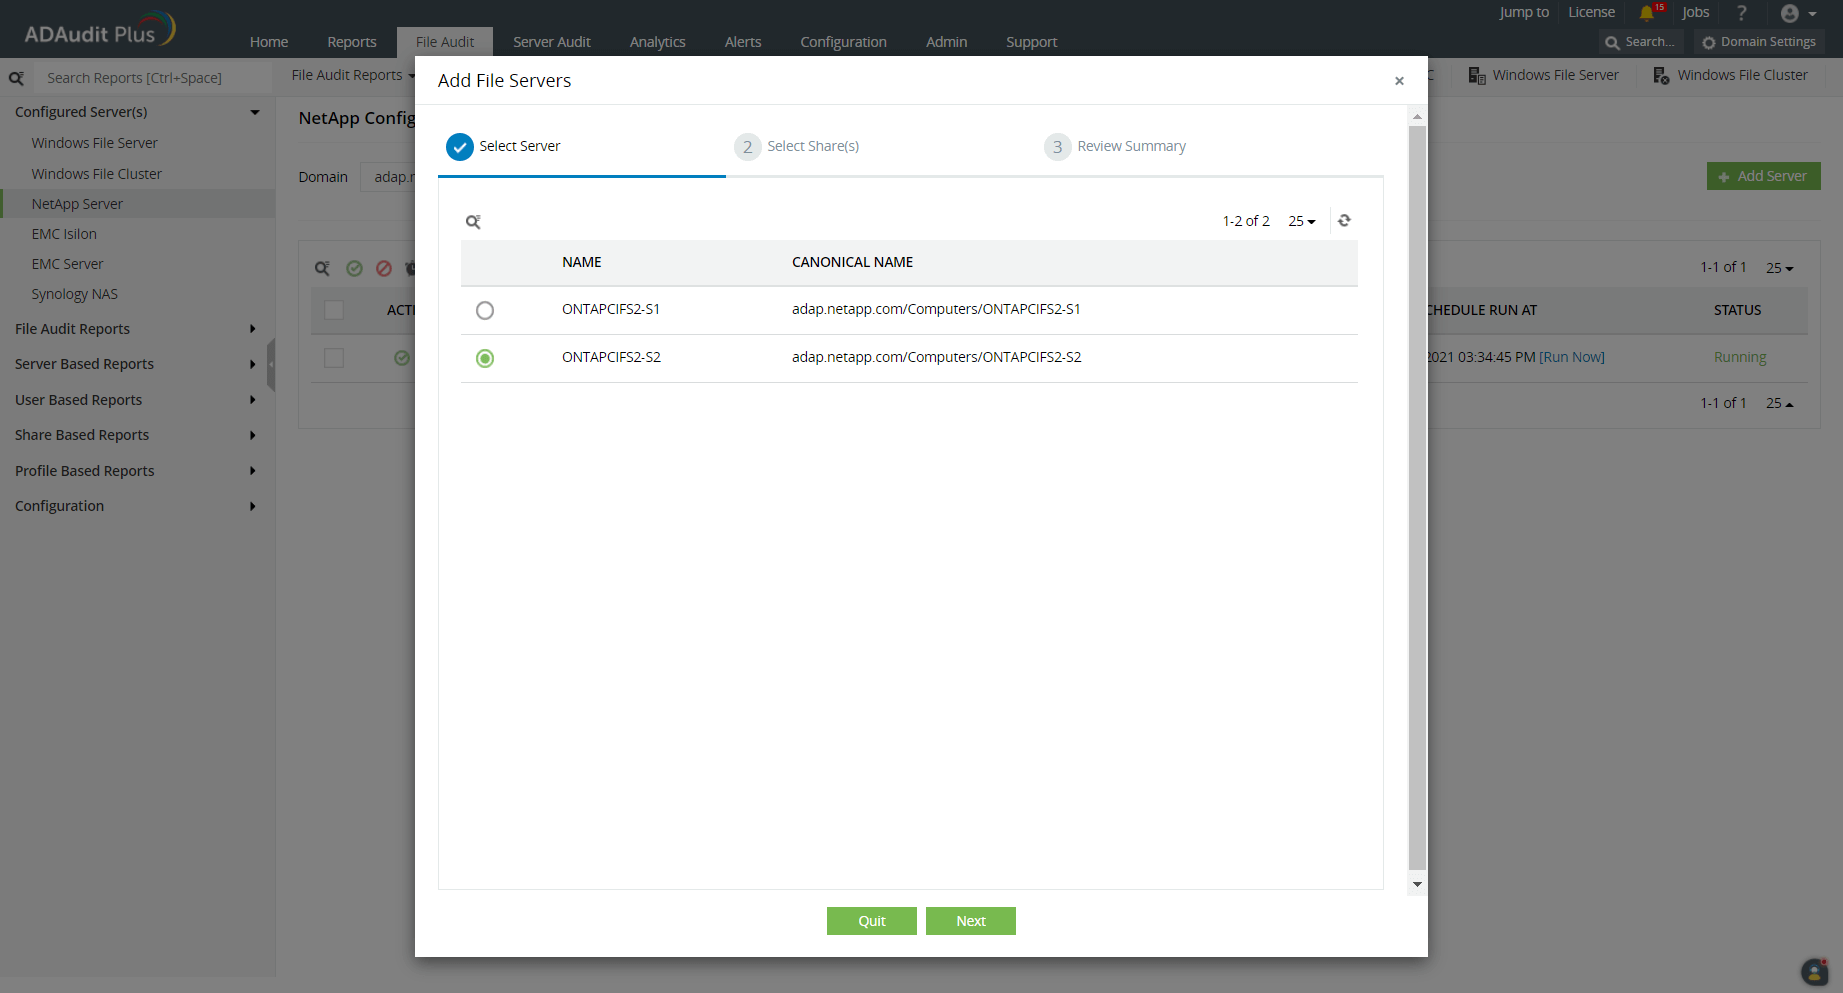 Adding NetApp 7Mode/vFilers in ADAudit Plus